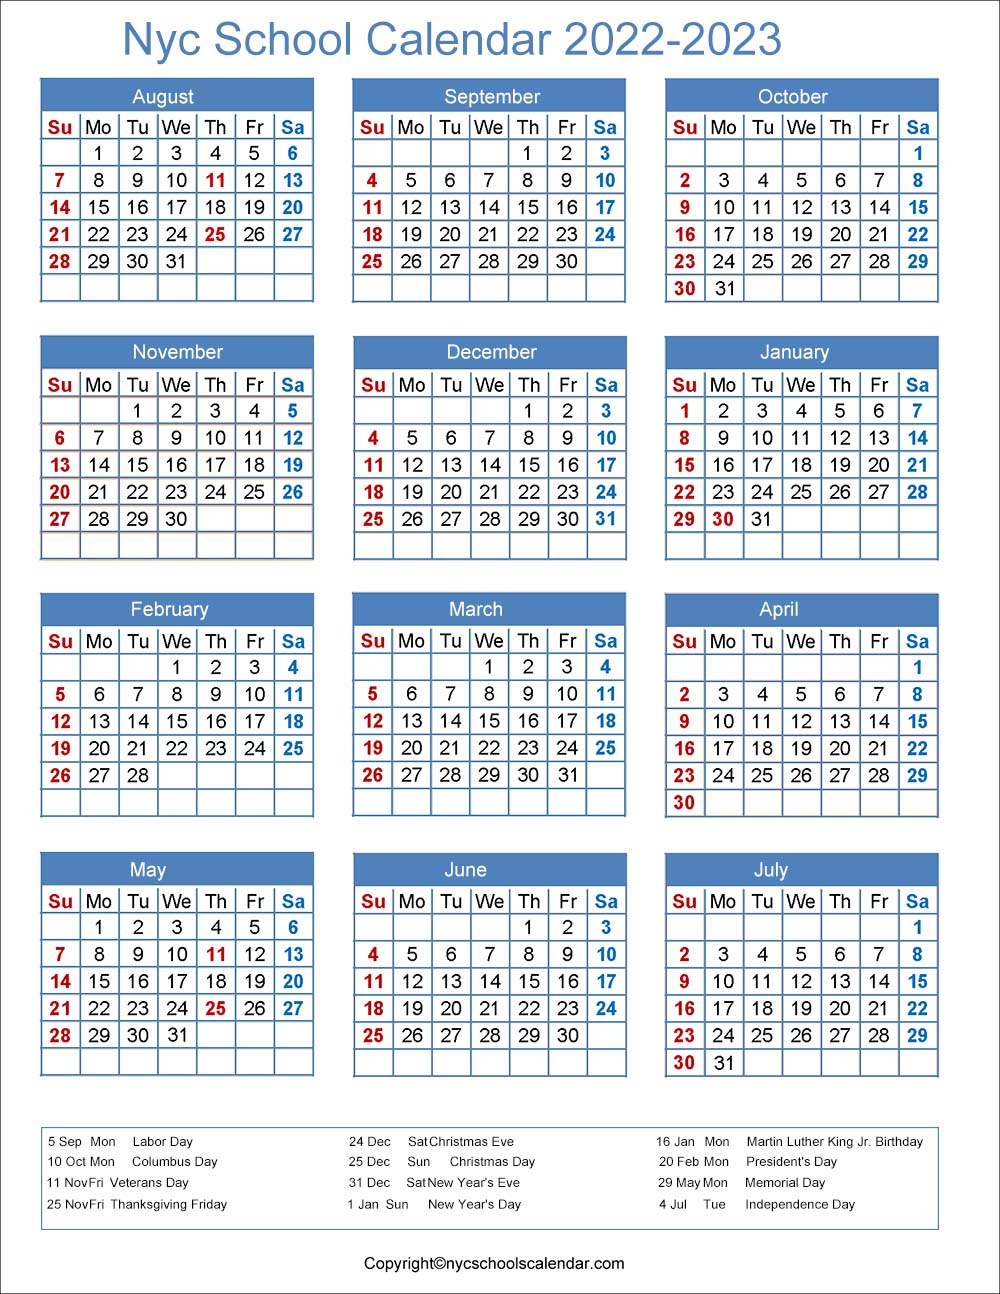 Calendar 2022 Nyc  Latest News Update within 2022 2023 Nyc School Calendar